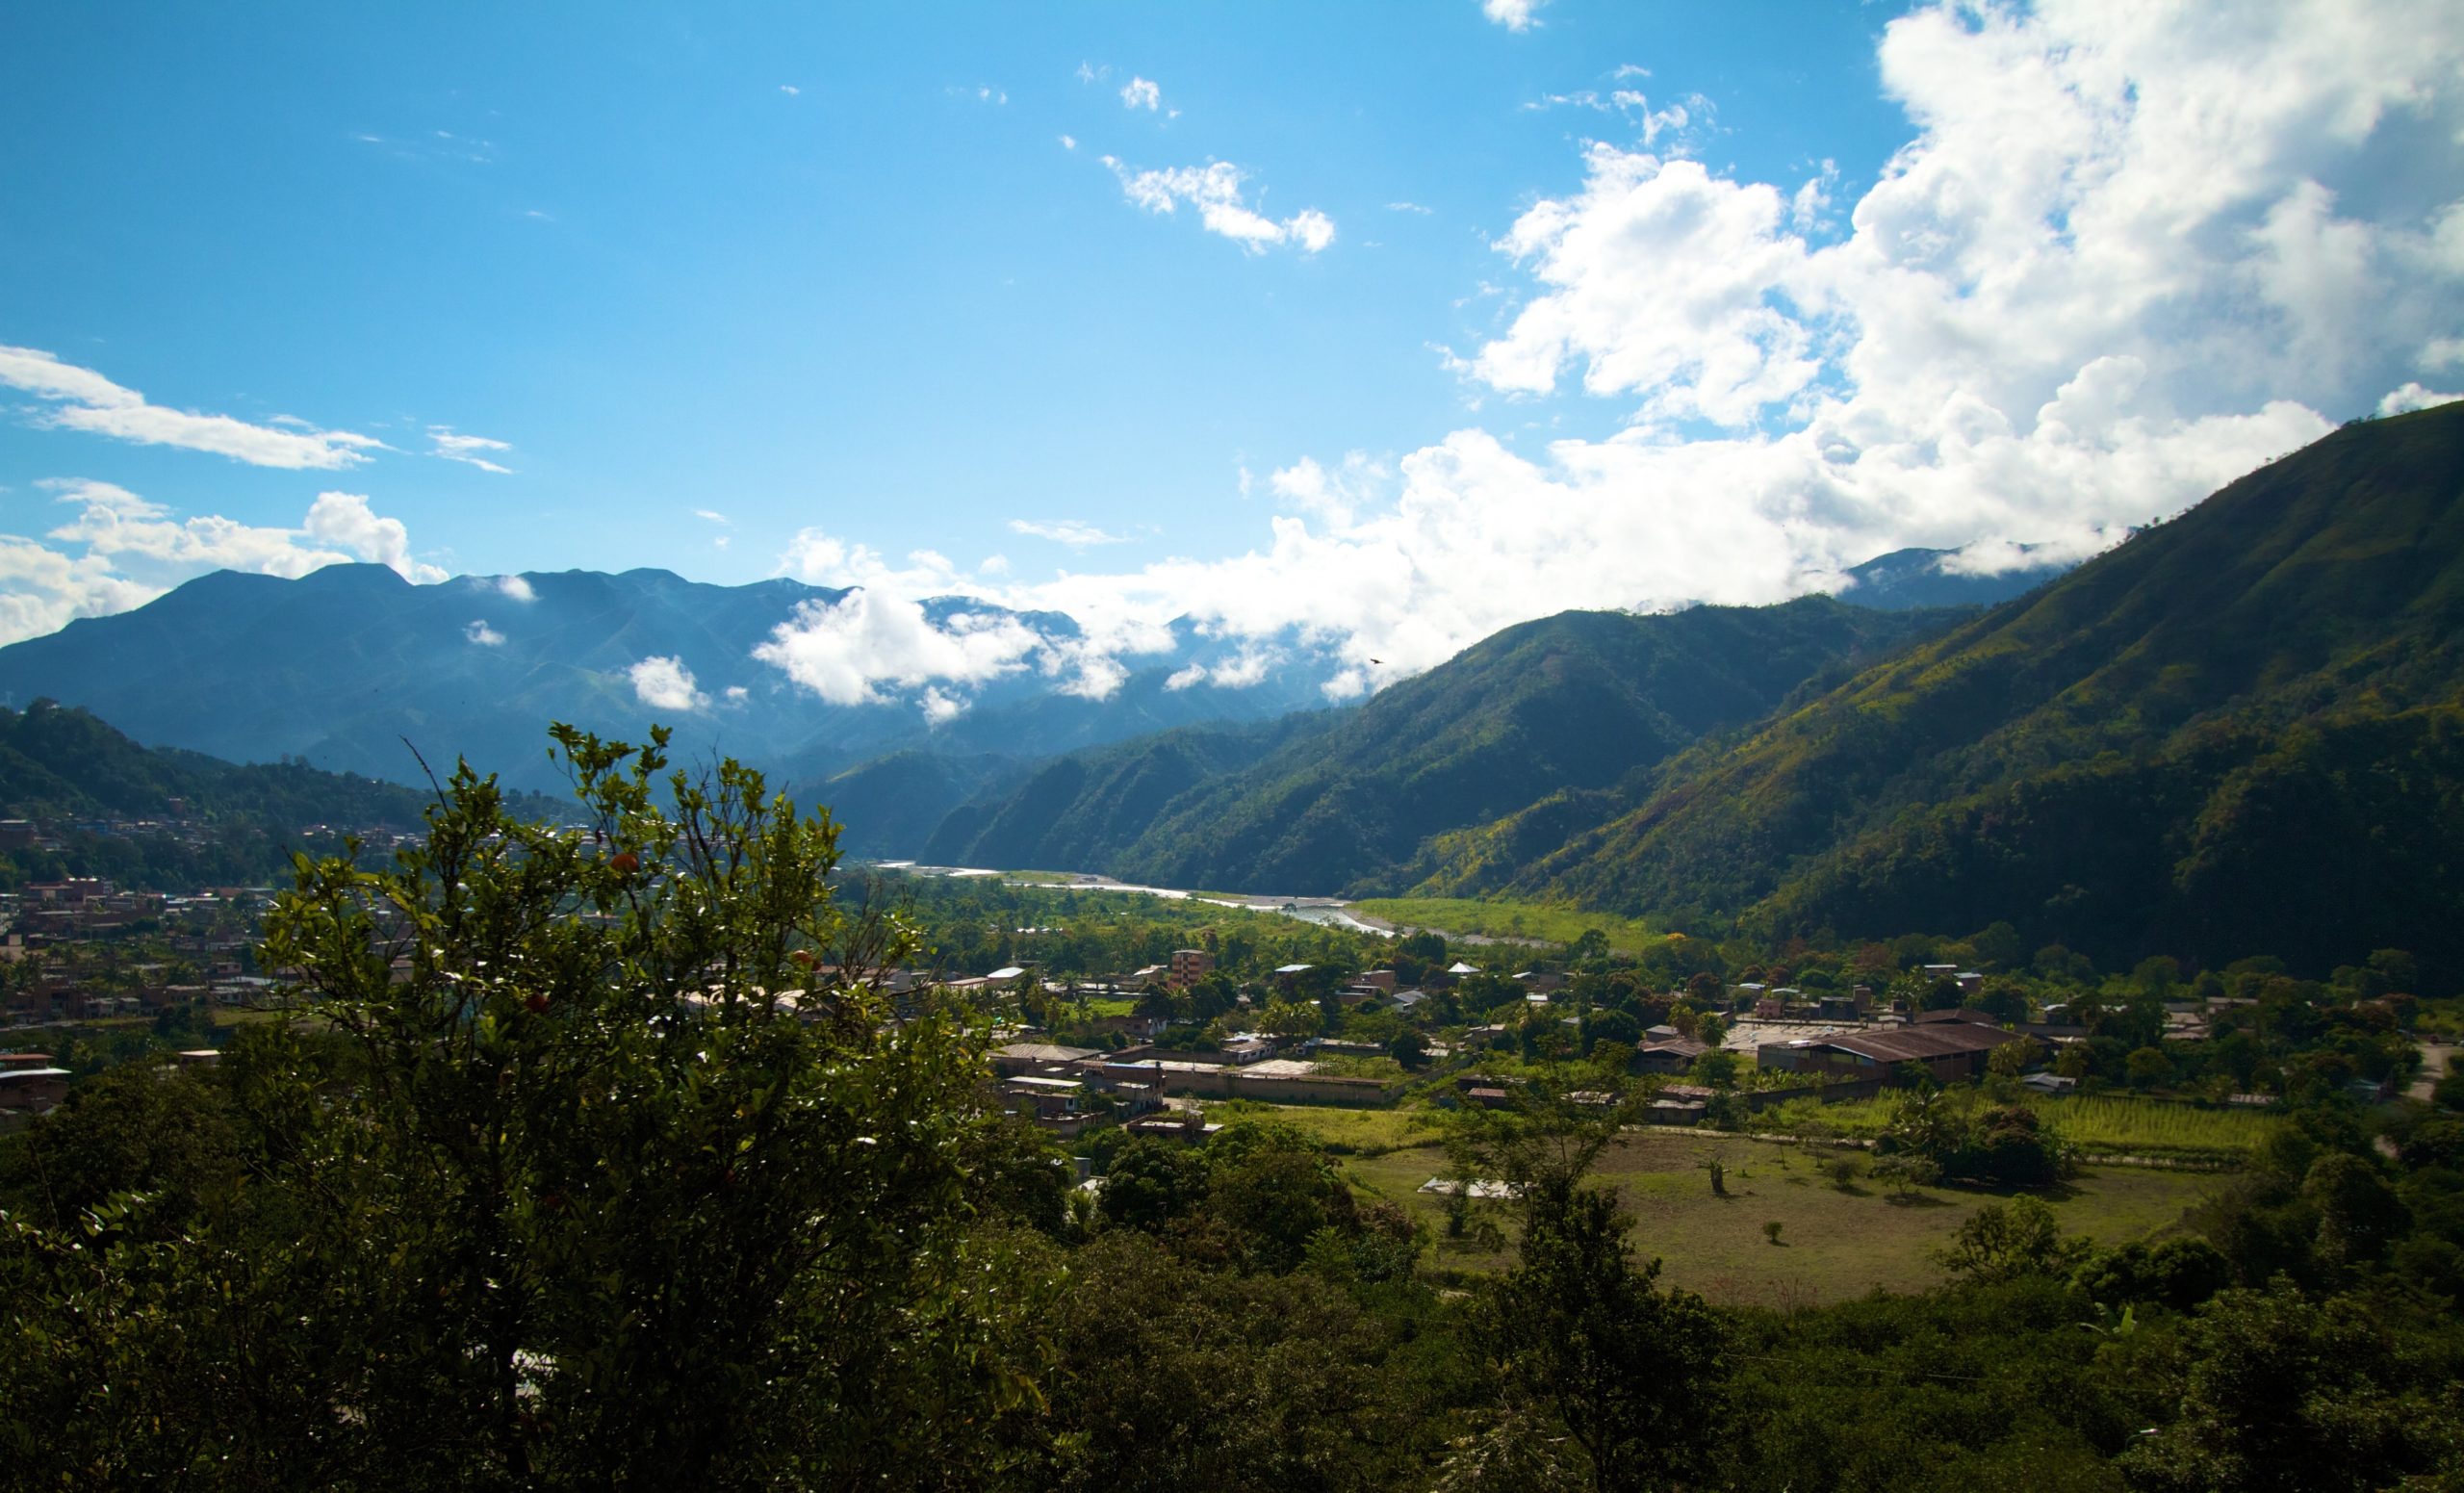 El valle que rodea San Martín de Pangoa